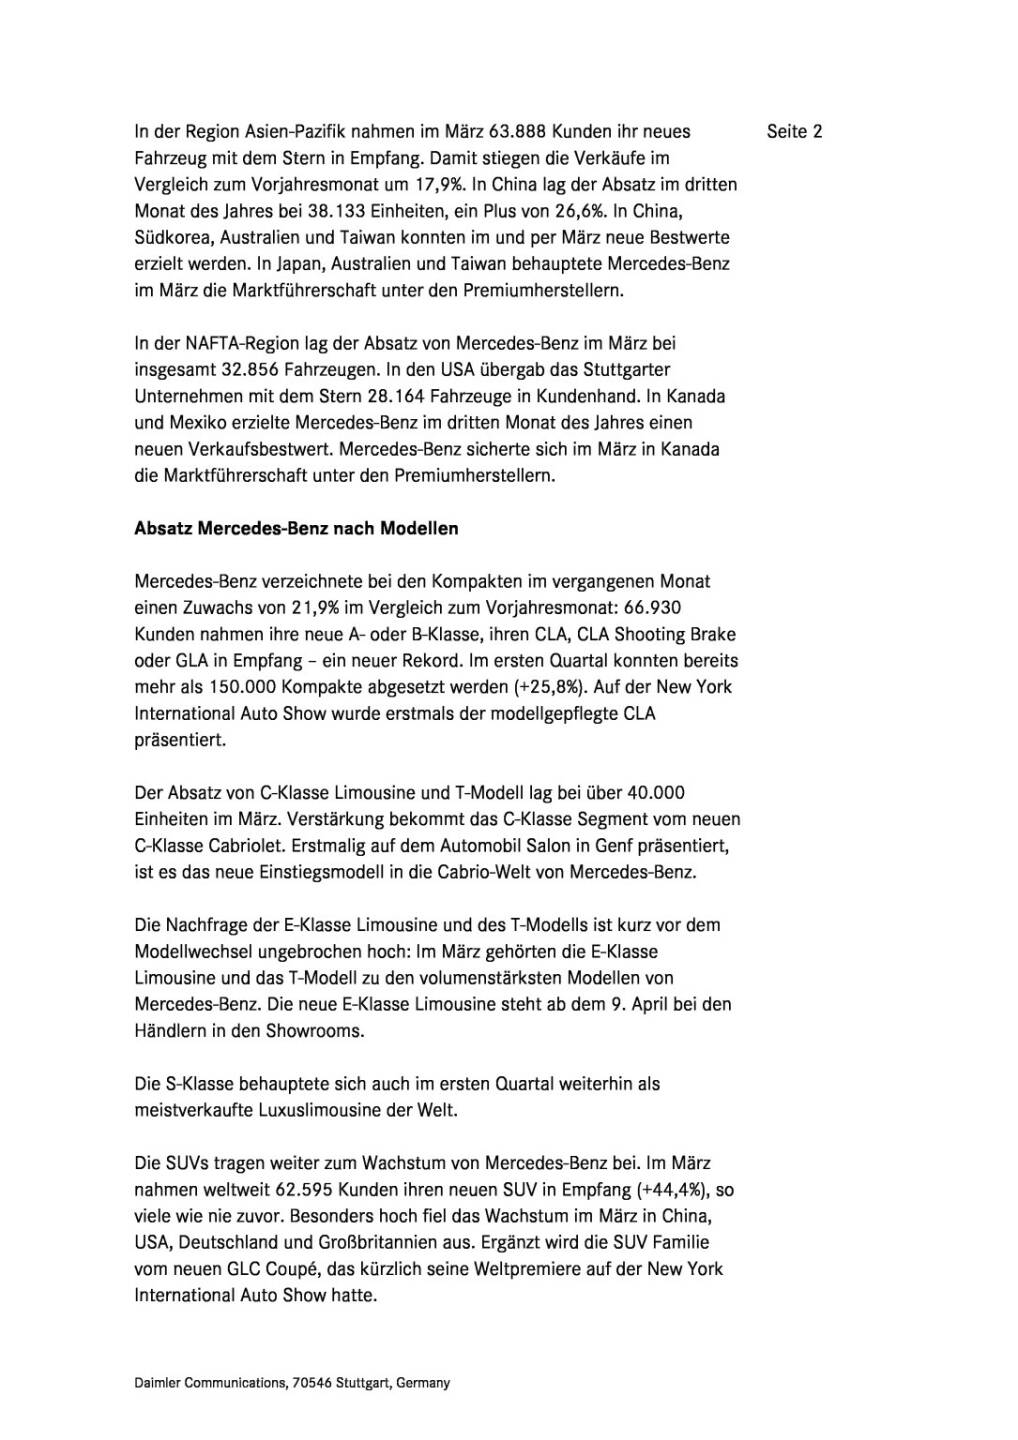 Mercedes-Benz: absatzstärkster Monat der Unternehmensgeschichte, Seite 2/4, komplettes Dokument unter http://boerse-social.com/static/uploads/file_855_mercedes-benz_absatzstärkster_monat_der_unternehmensgeschichte.pdf